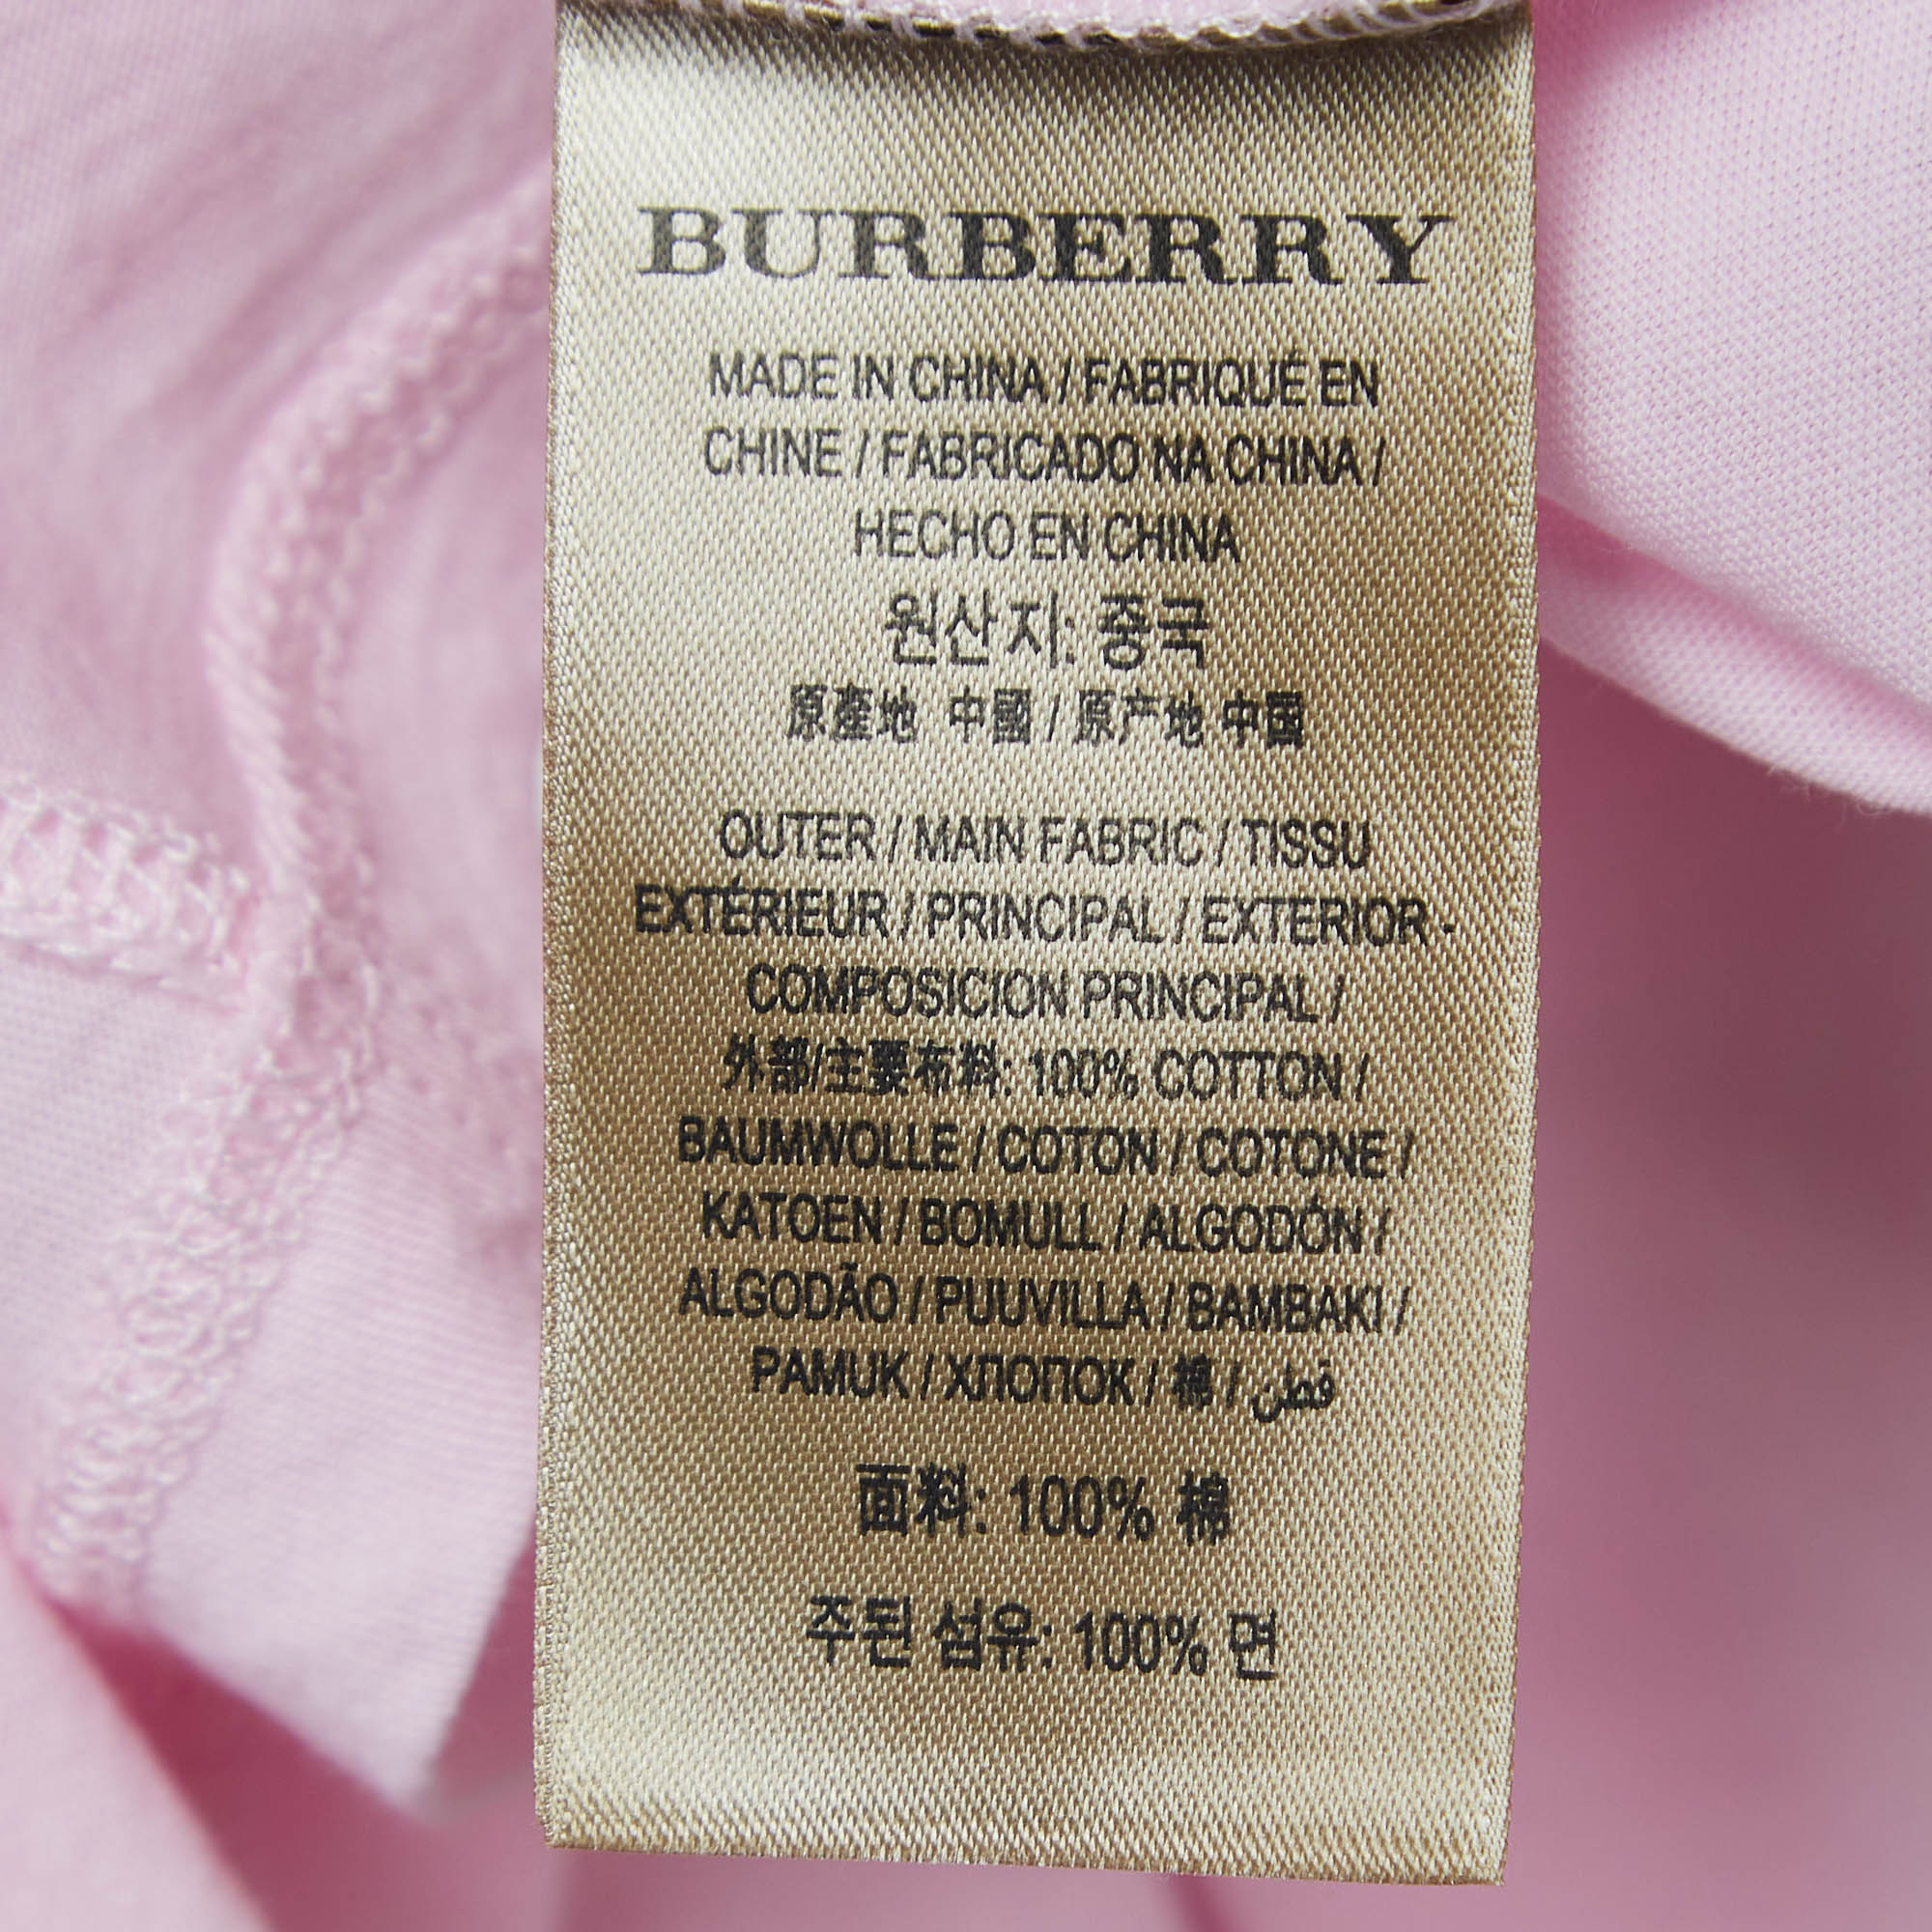 Burberry London Light Pink Logo Embroidered Cotton V-Neck T-Shirt L